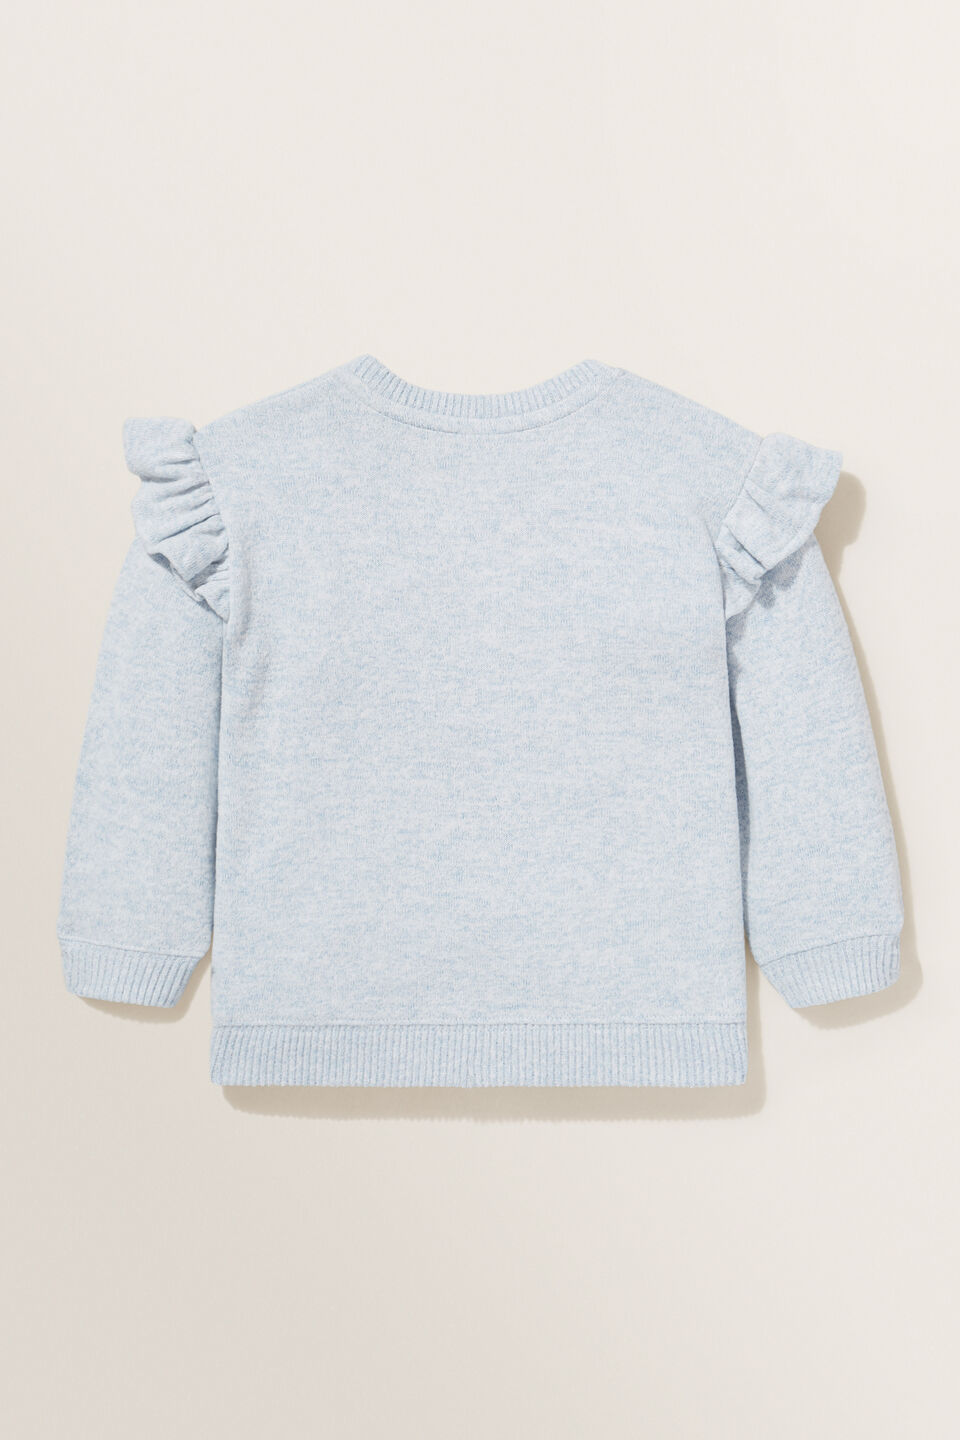 Brushed Marle Sweater  Baby Blue Marle